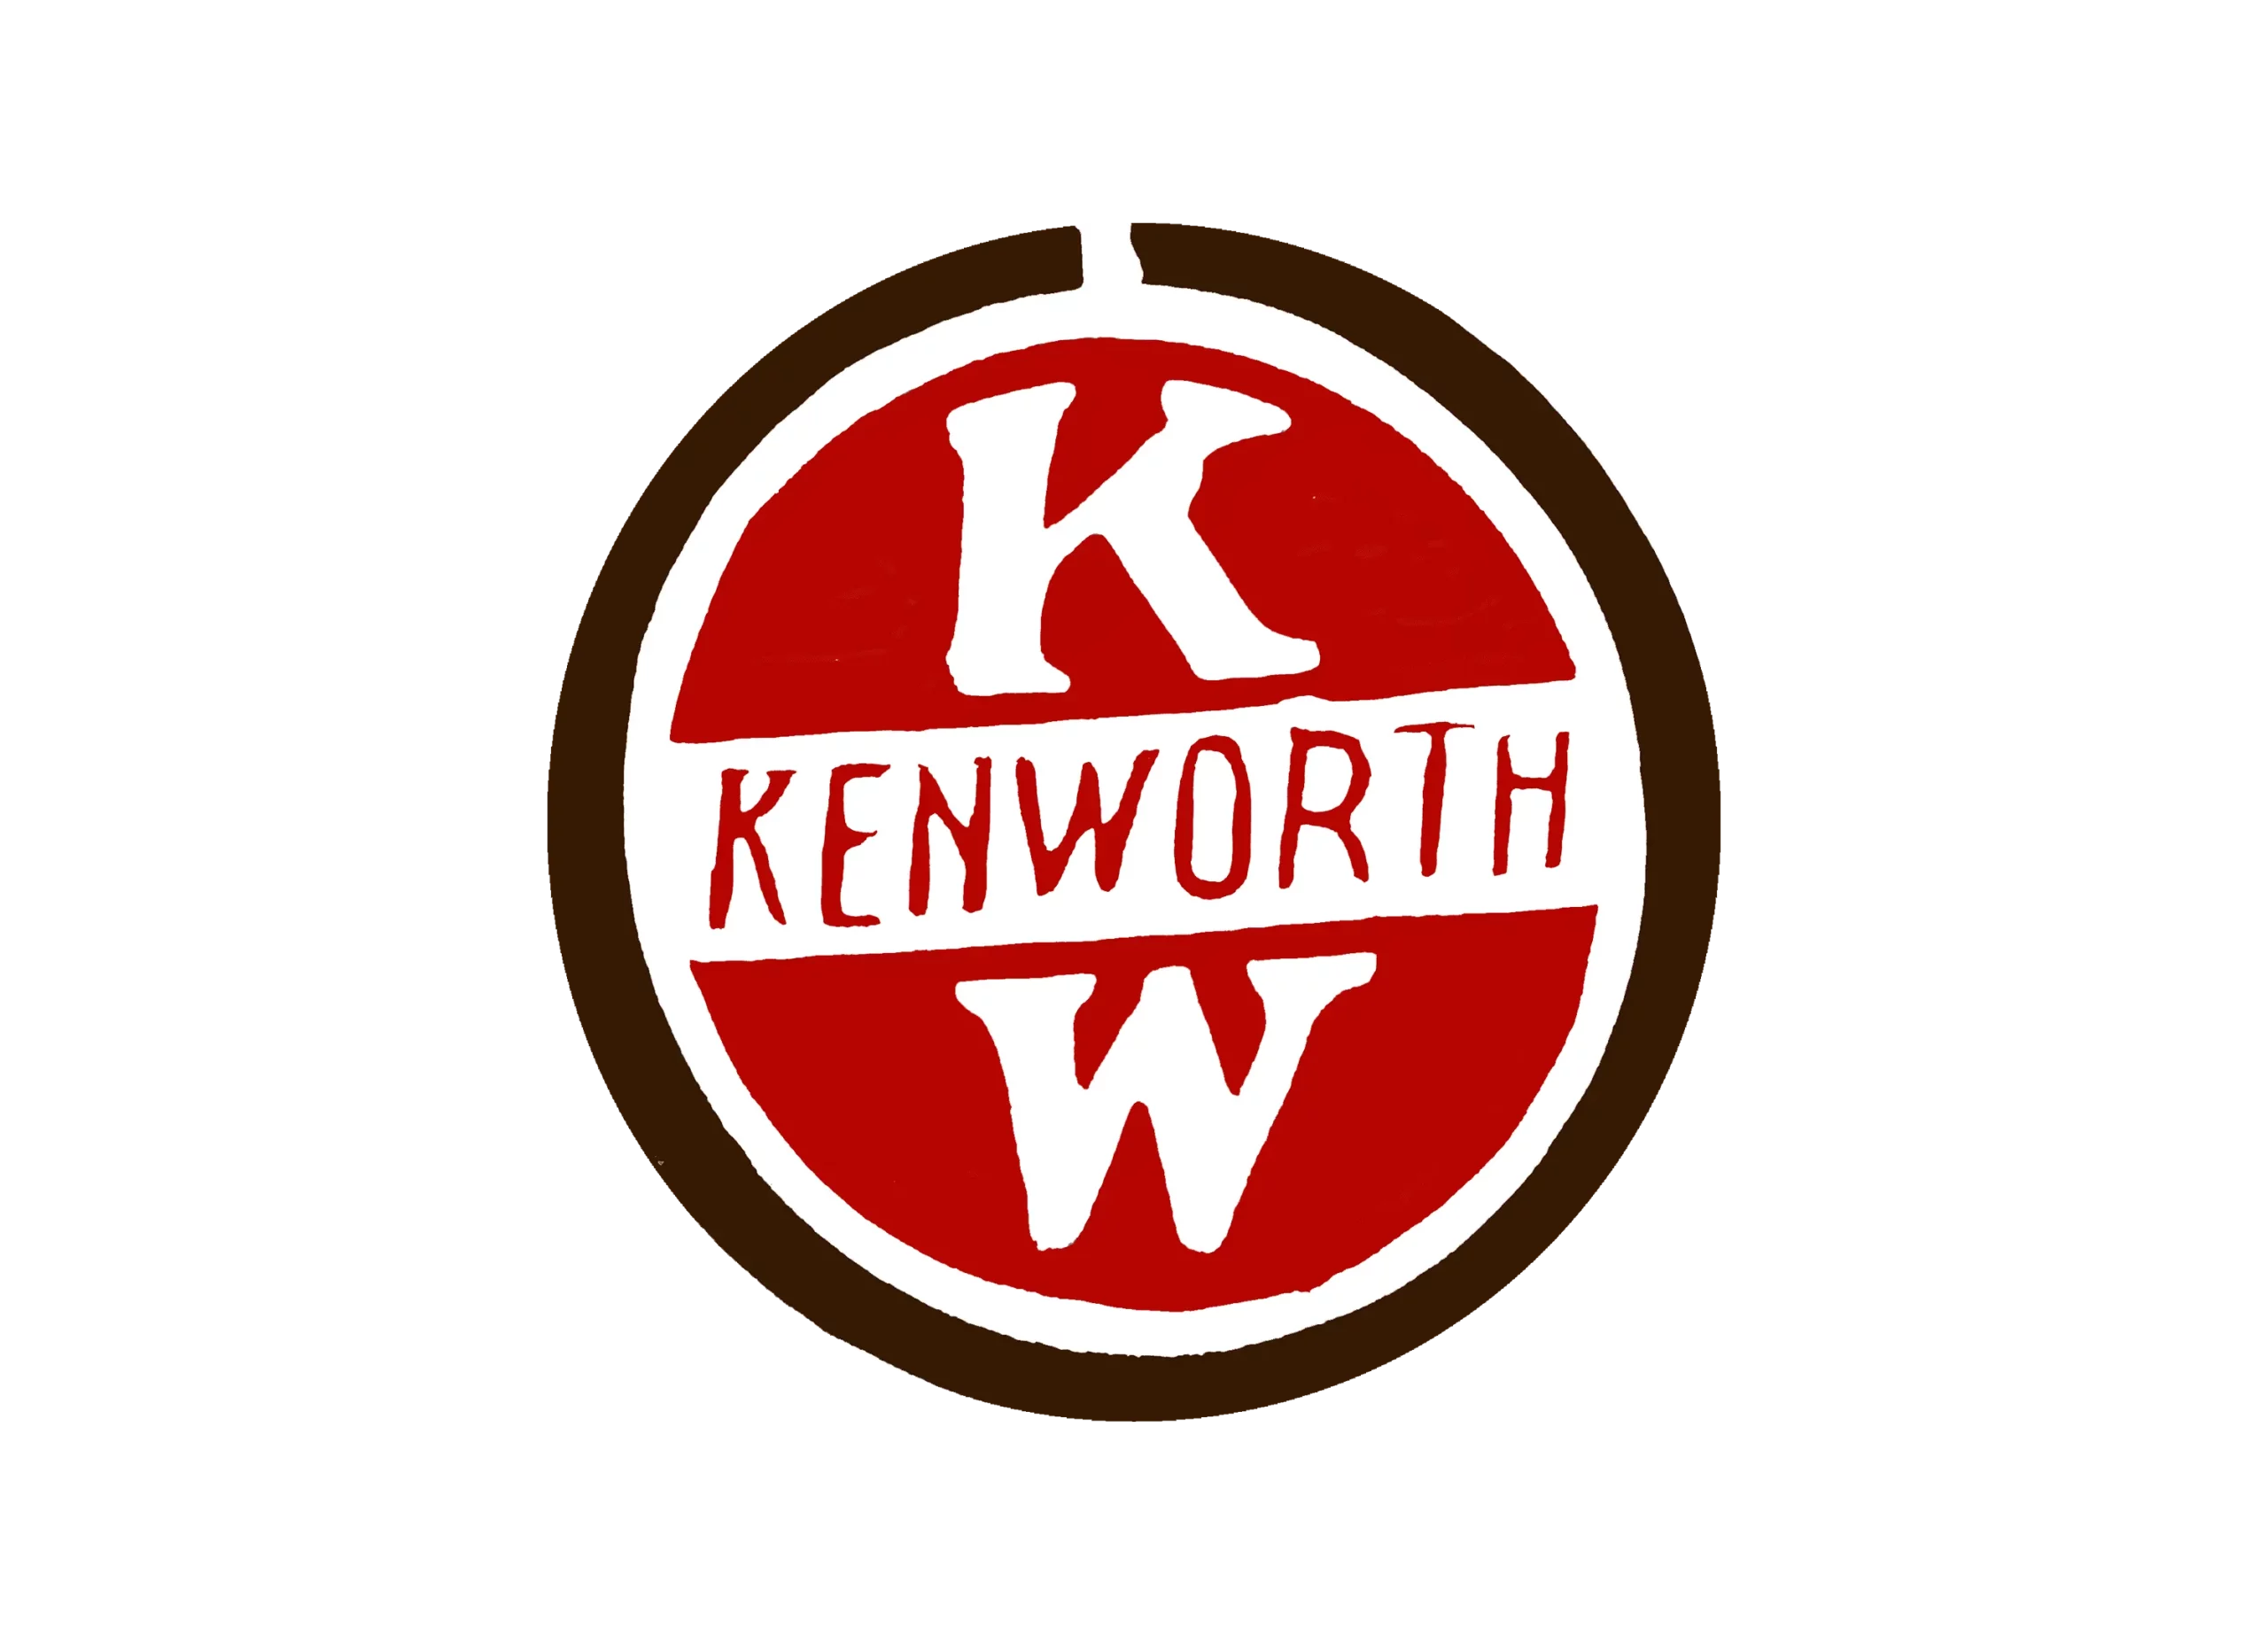 Kenworth logo 1923-1956